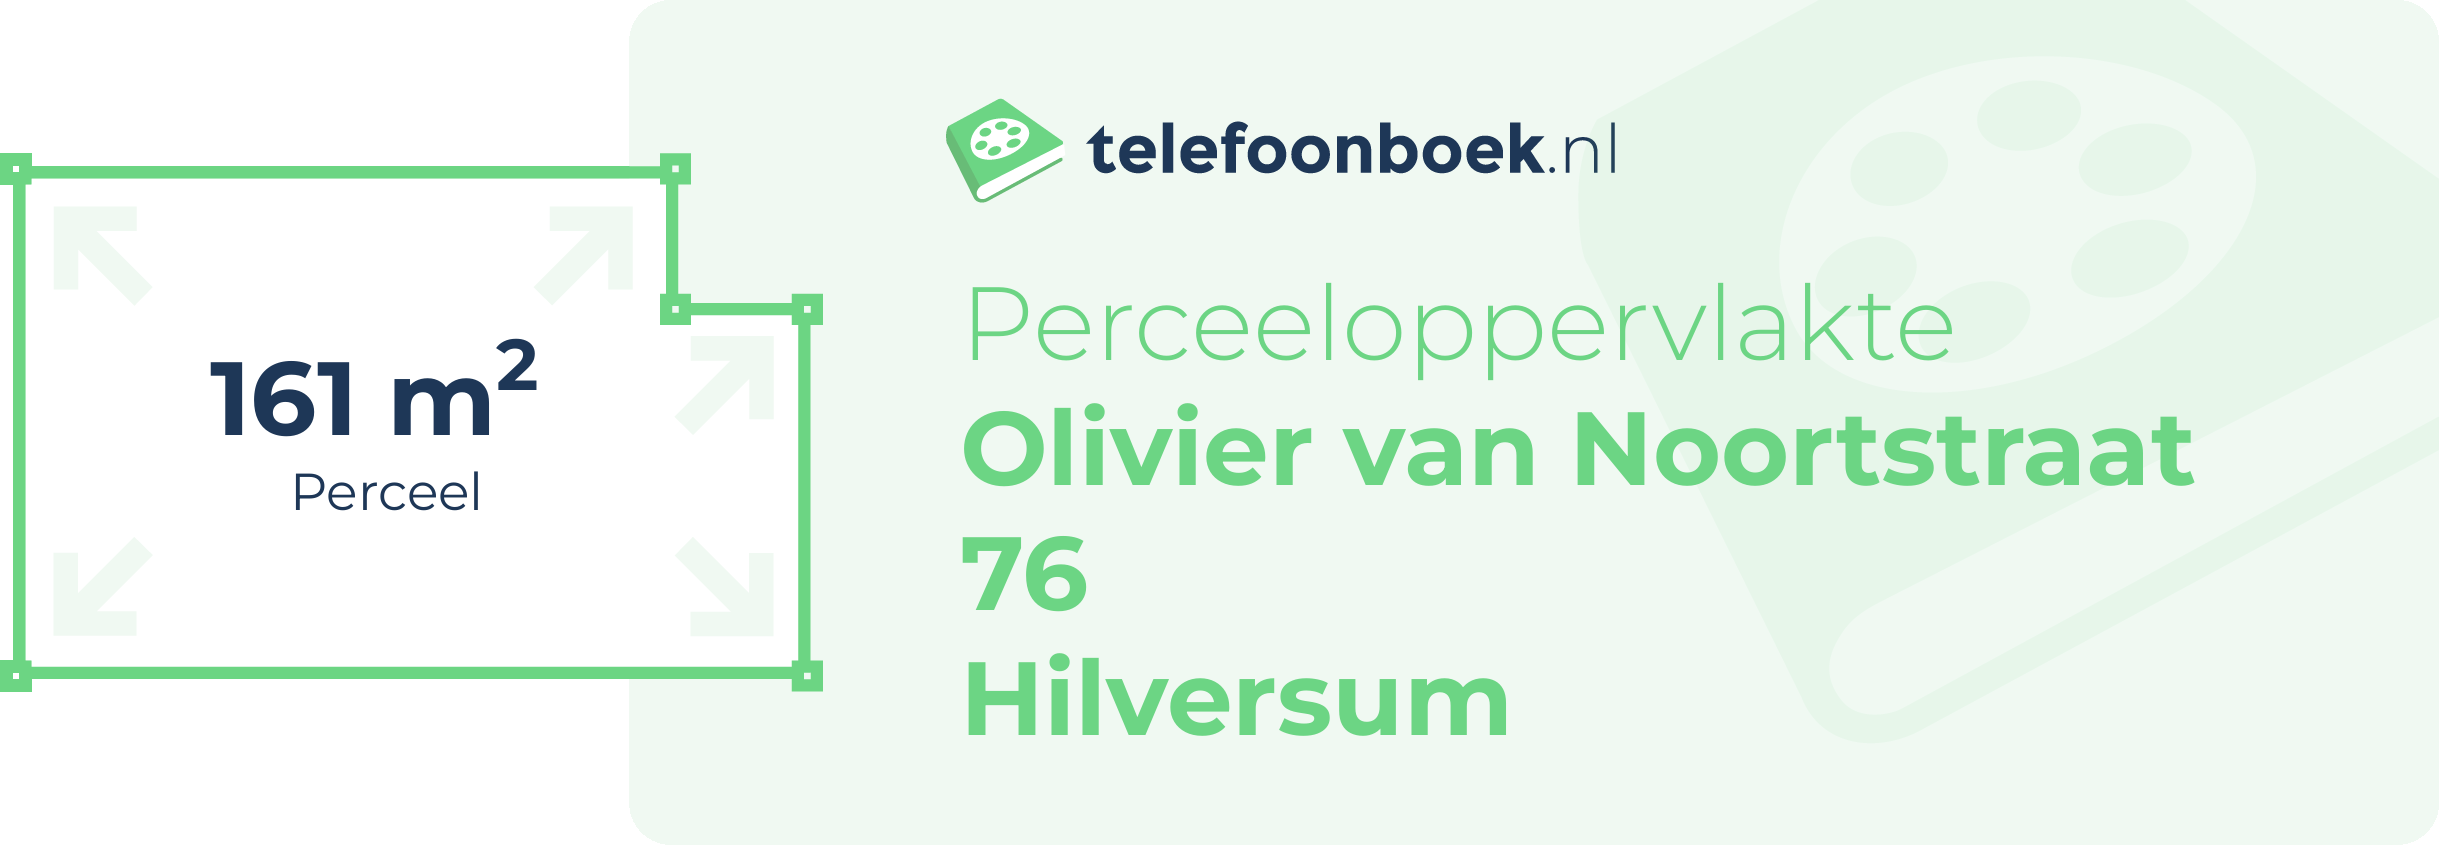 Perceeloppervlakte Olivier Van Noortstraat 76 Hilversum